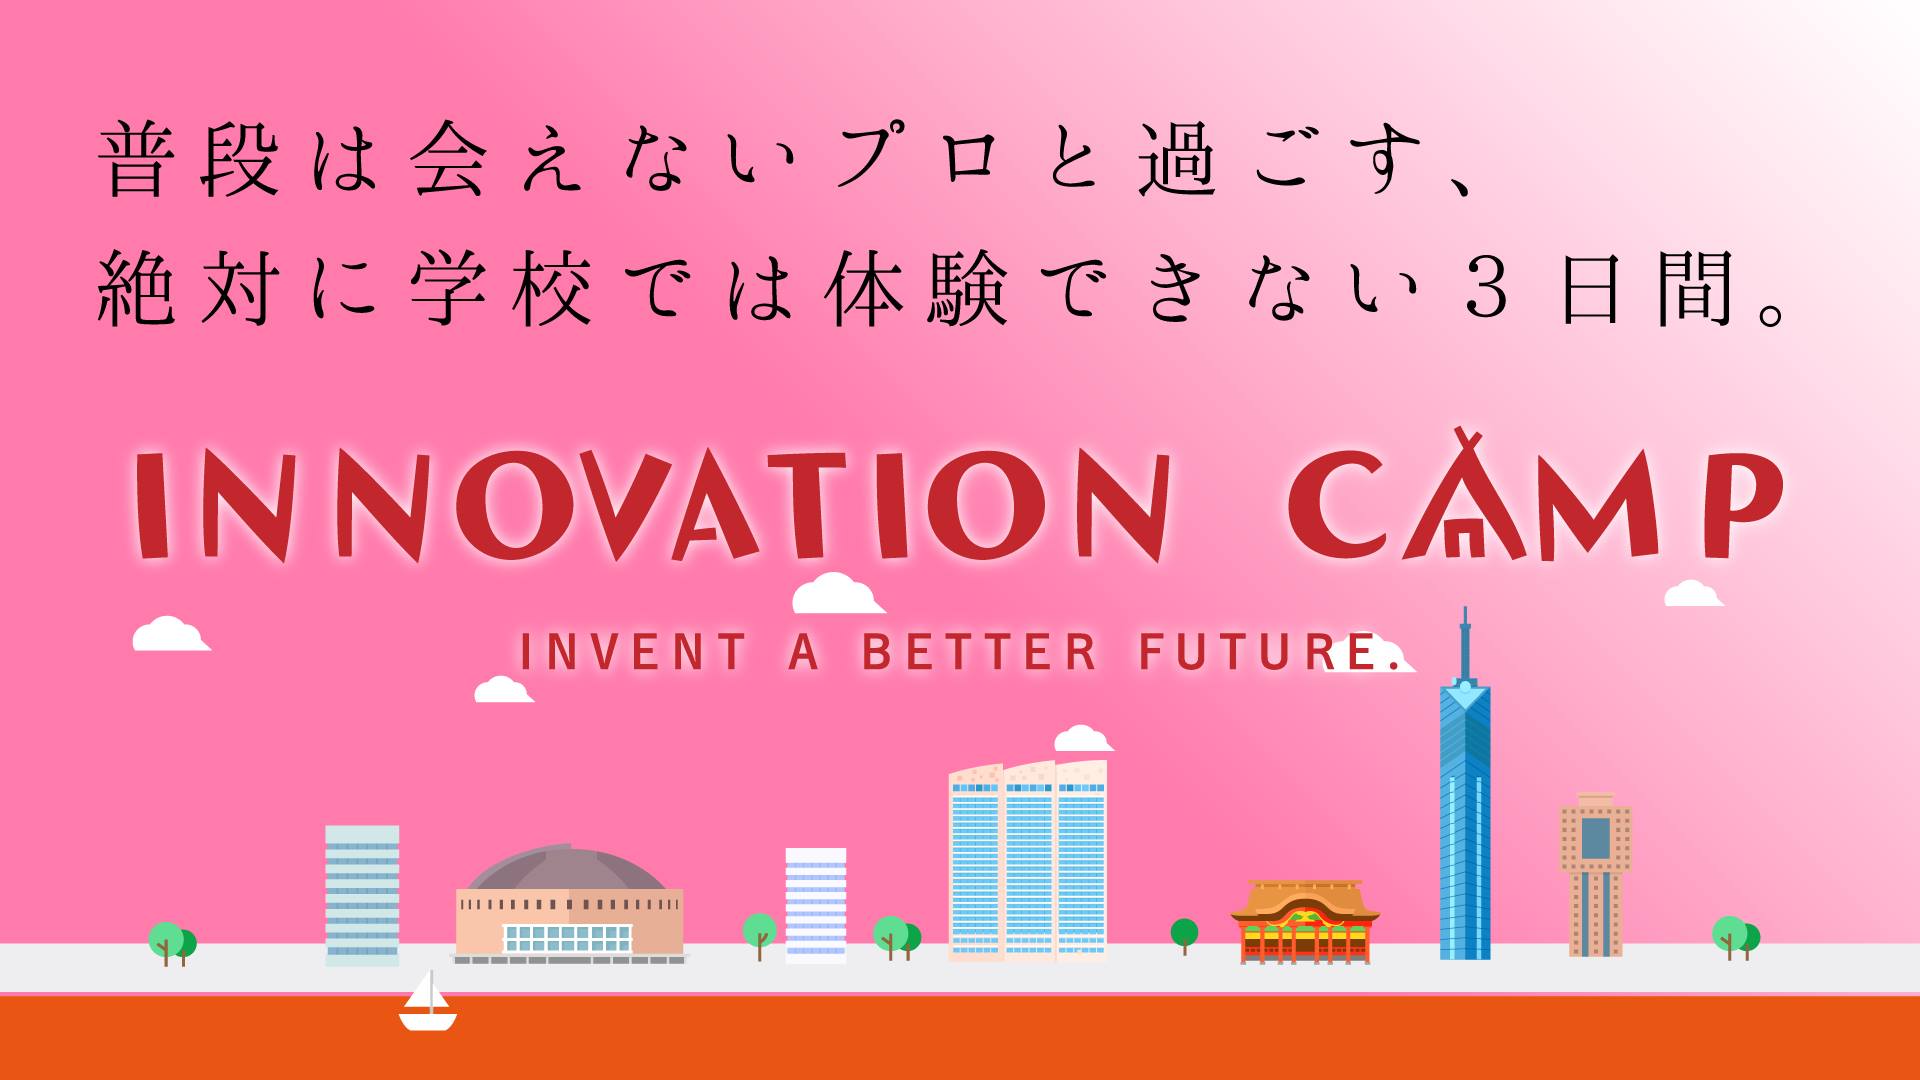 INNOVATION CAMP 2018 Spring Fukuoka